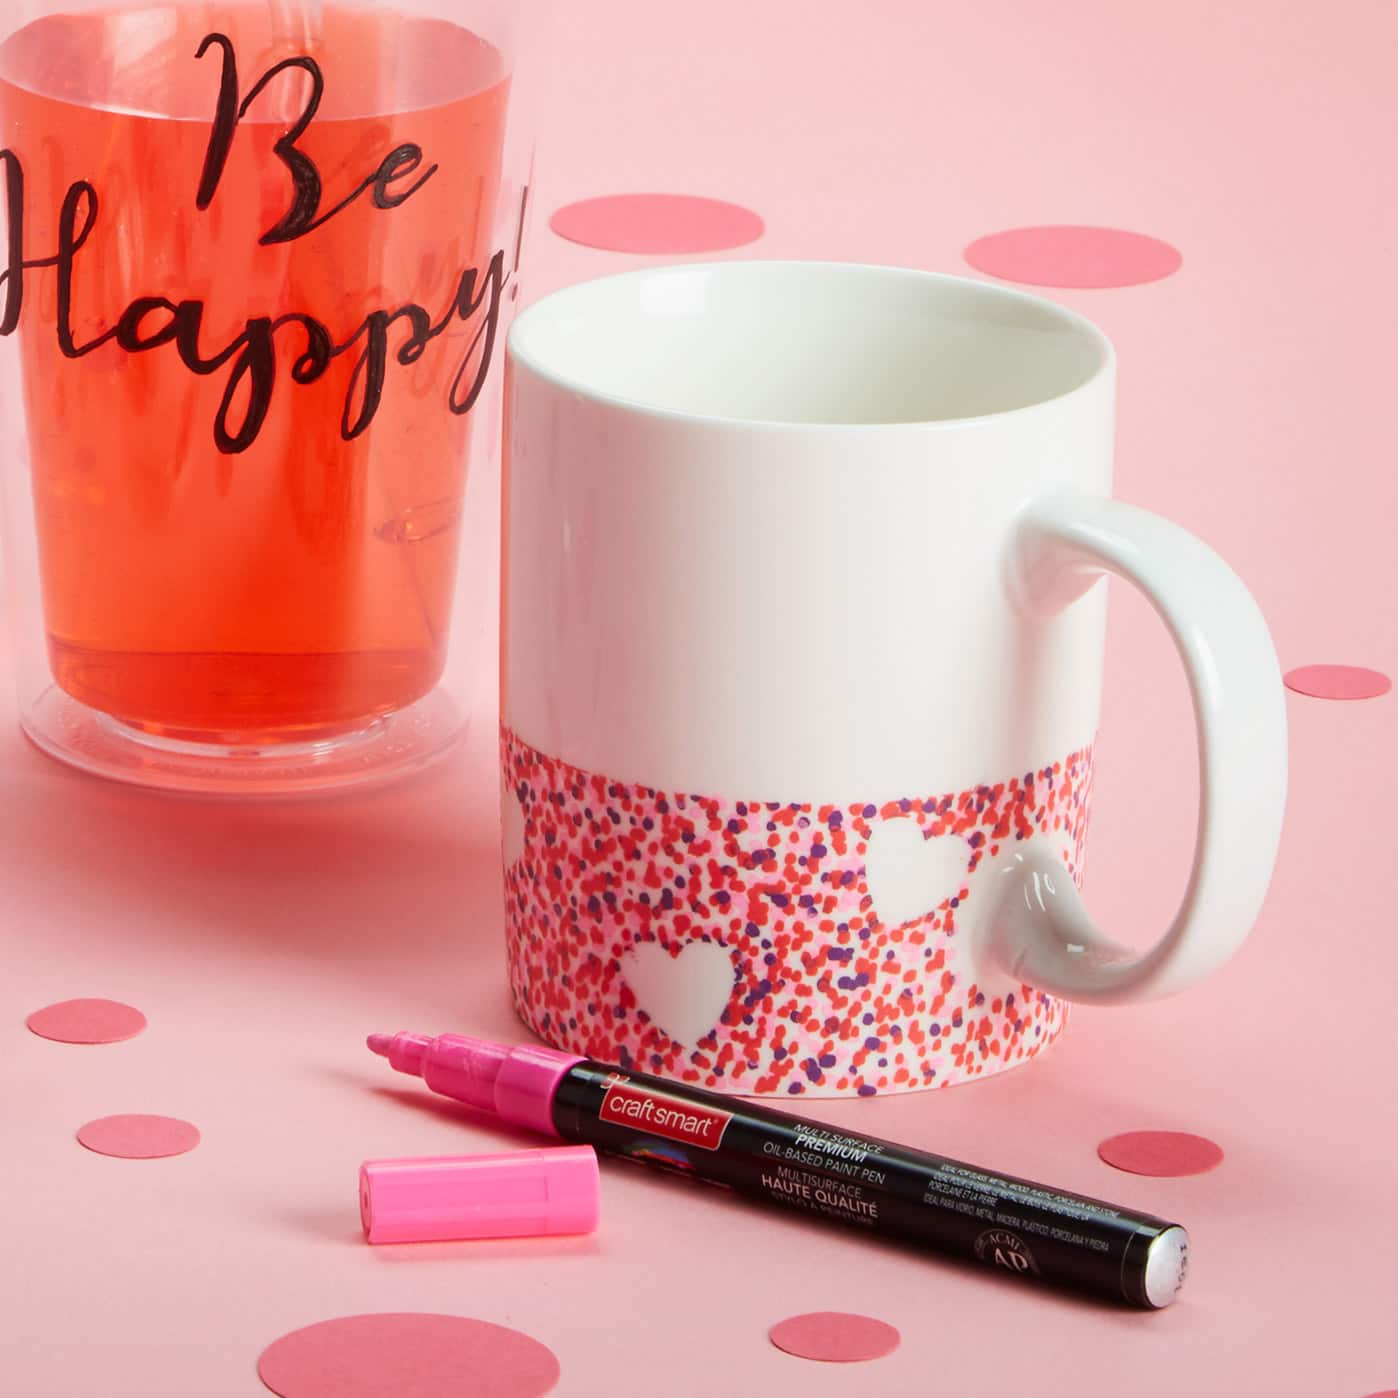 Valentine Cup Gift Idea - The Happy Scraps